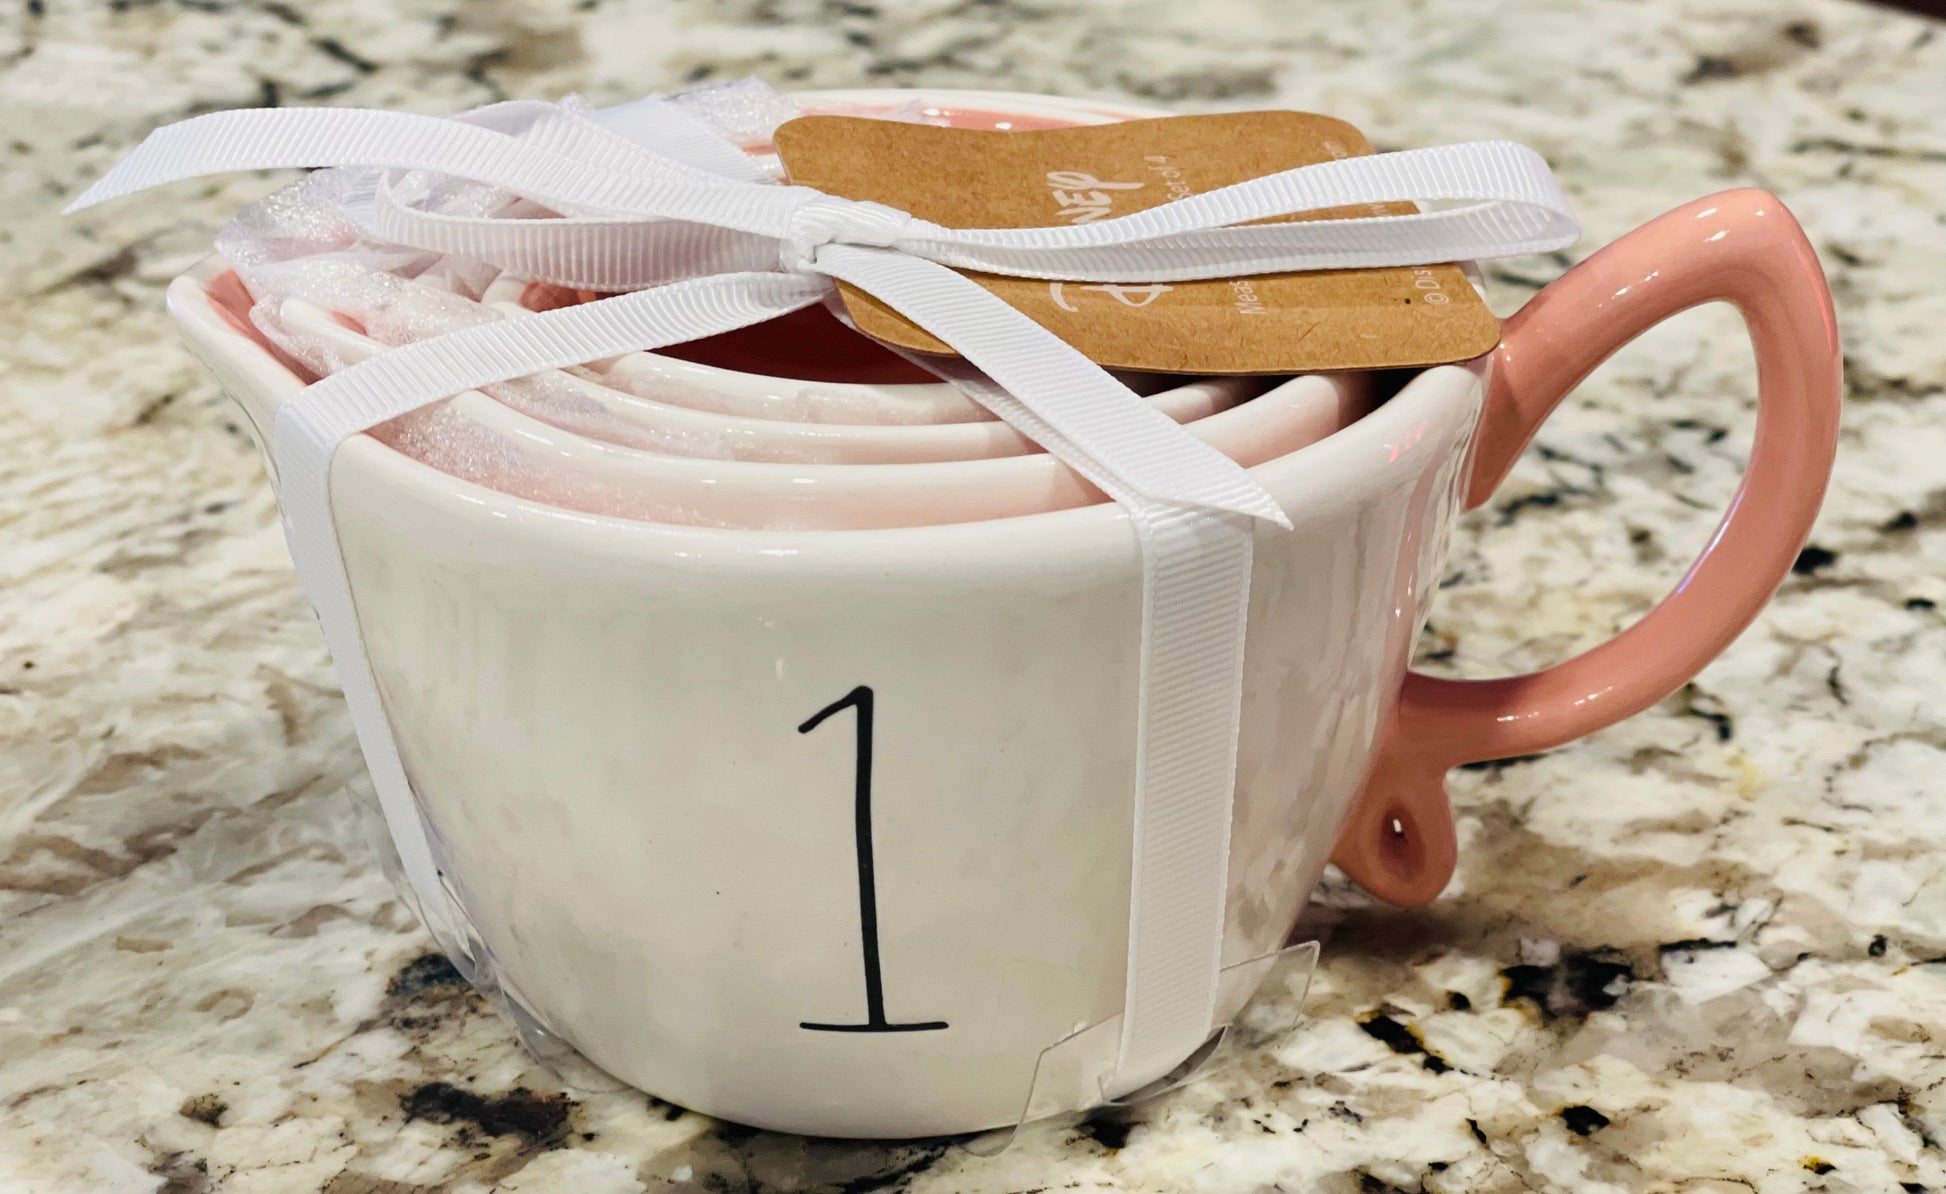 Ceramic Disney Princess Mugs, Heart Shaped Handle Coffee Mugs